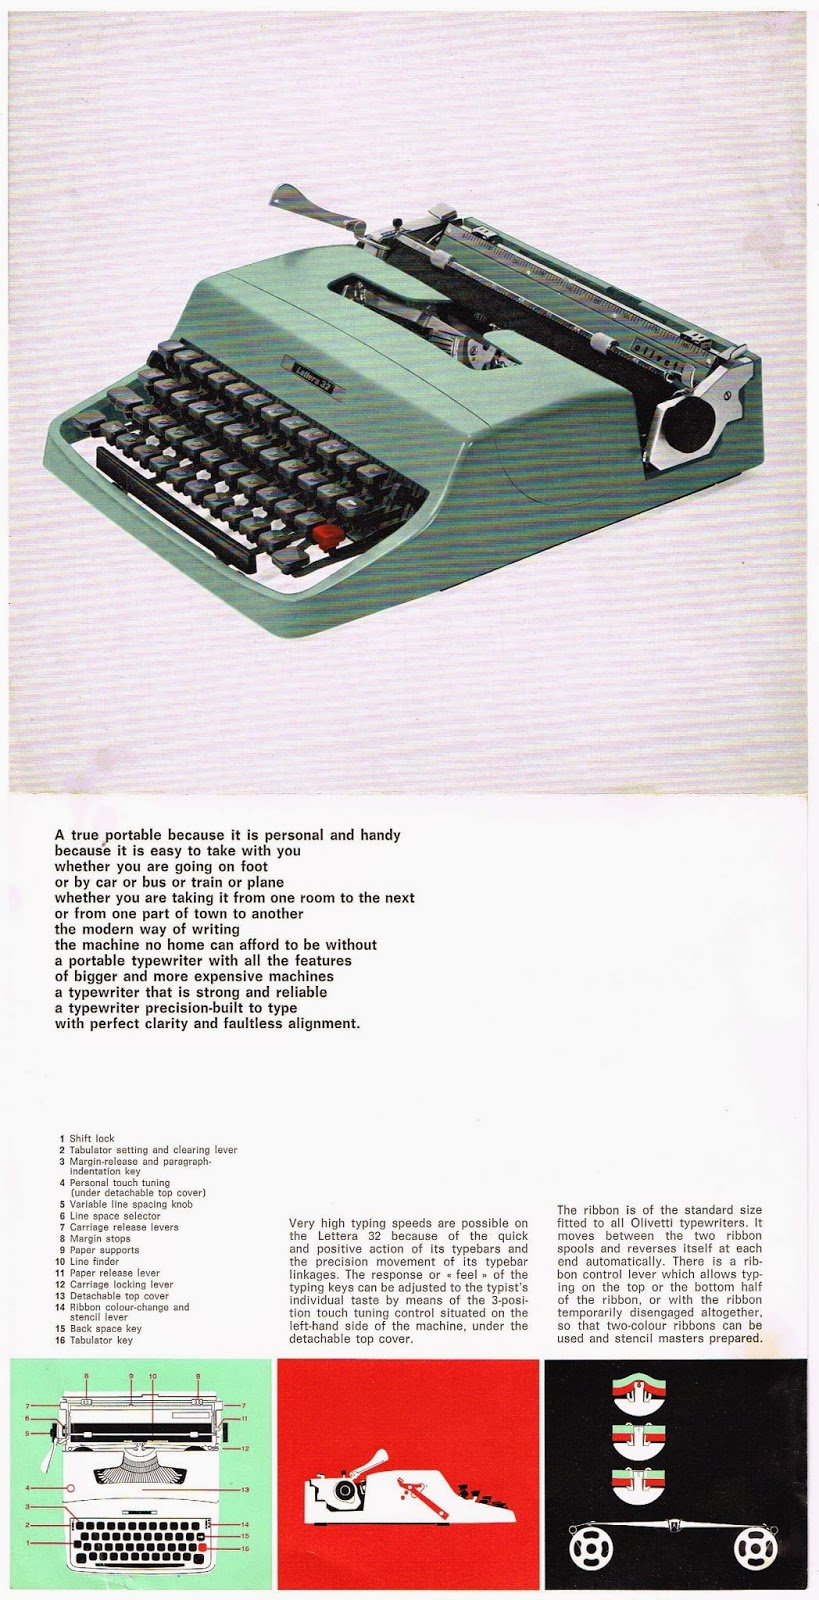 oz.Typewriter: Olivetti Lettera 32 on its way